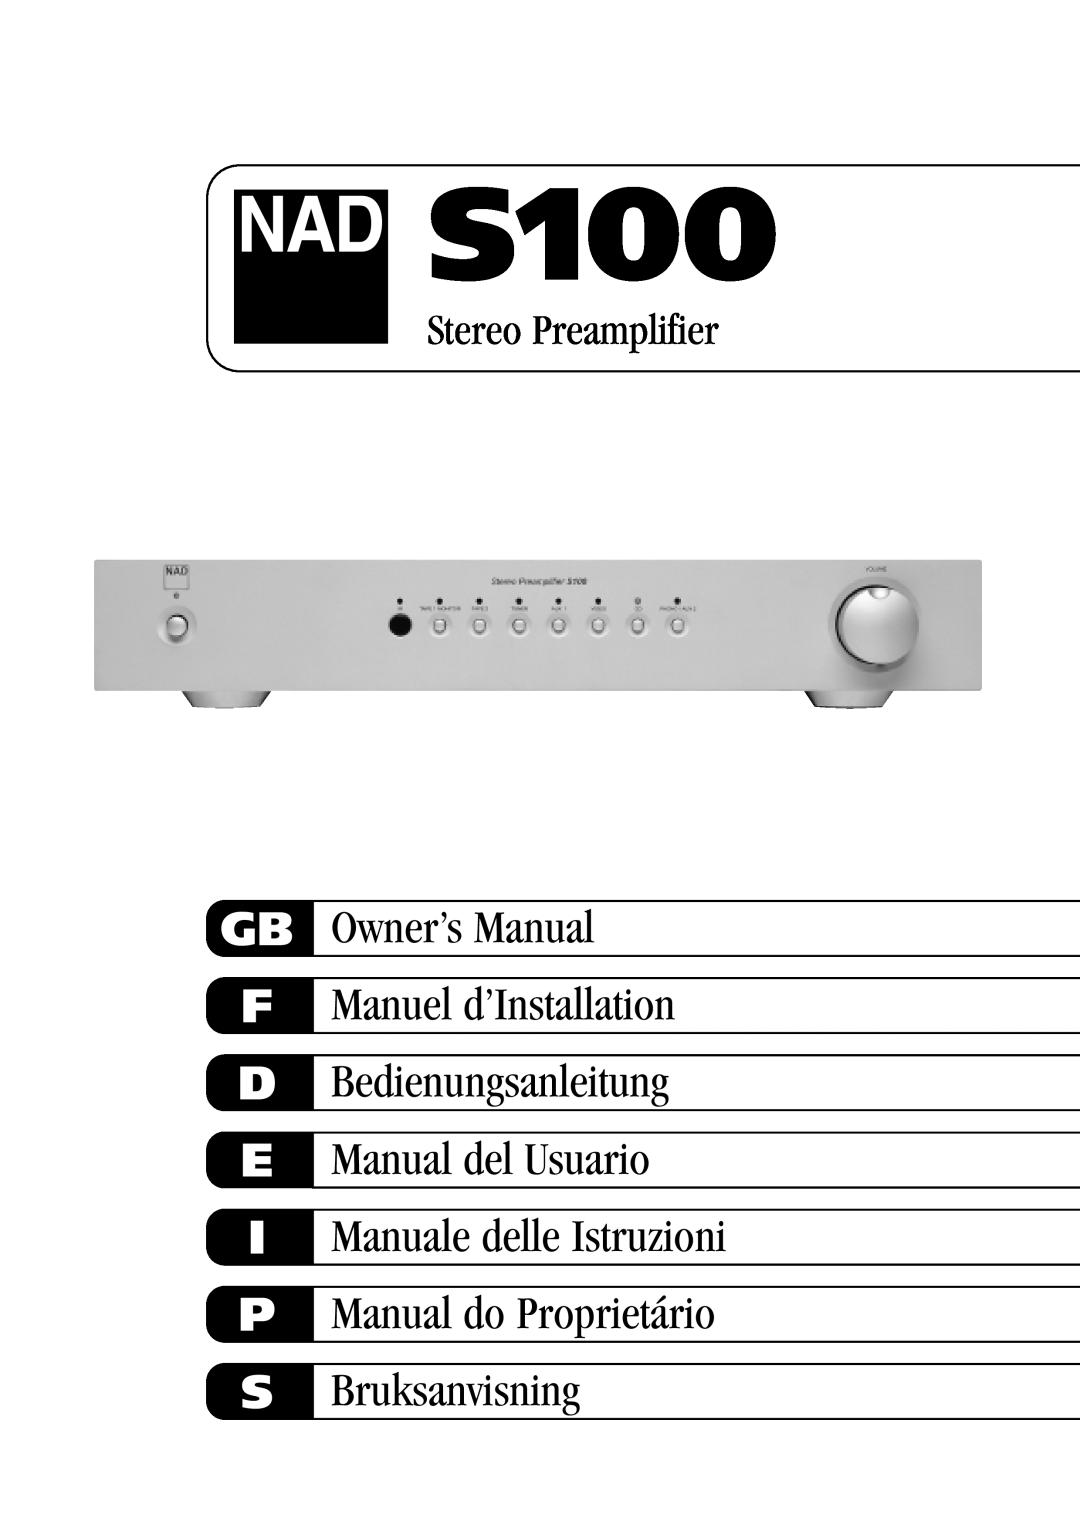 NAD S100 owner manual Gb F D E I P S, Bedienungsanleitung Manual del Usuario, Bruksanvisning, Stereo Preamplifier 